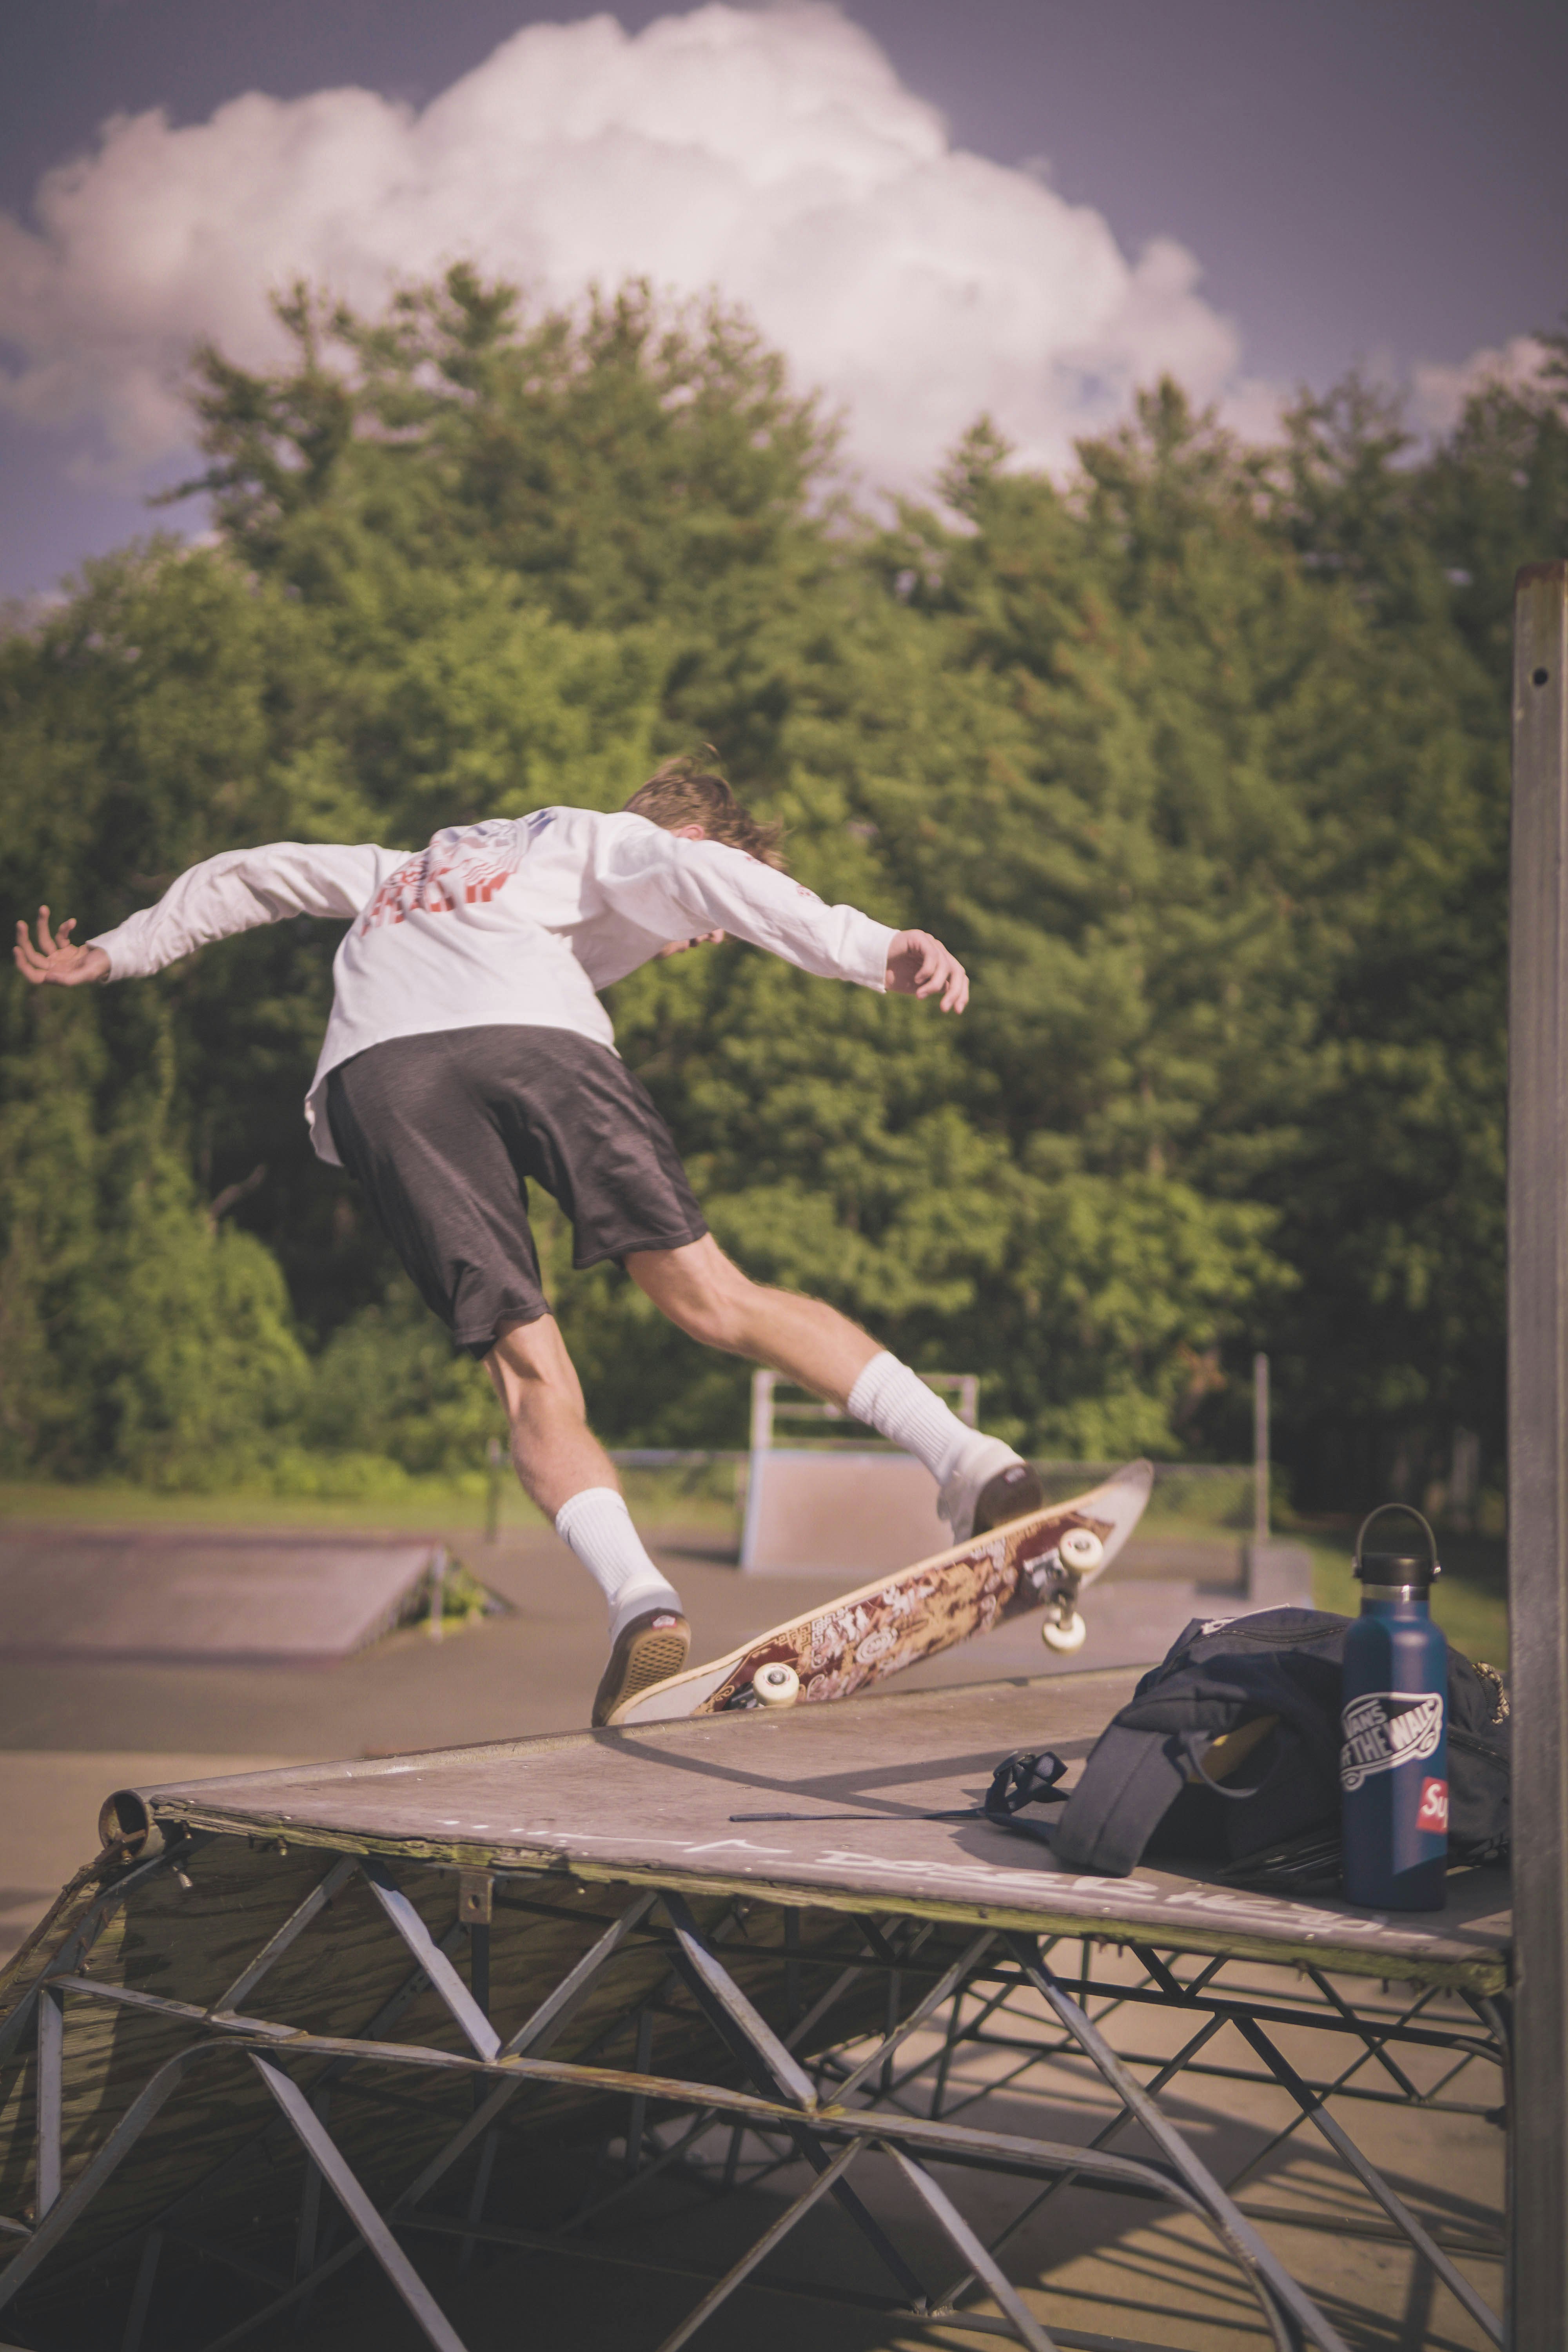 simsbury skatepark skateboarder sunny day - ryan